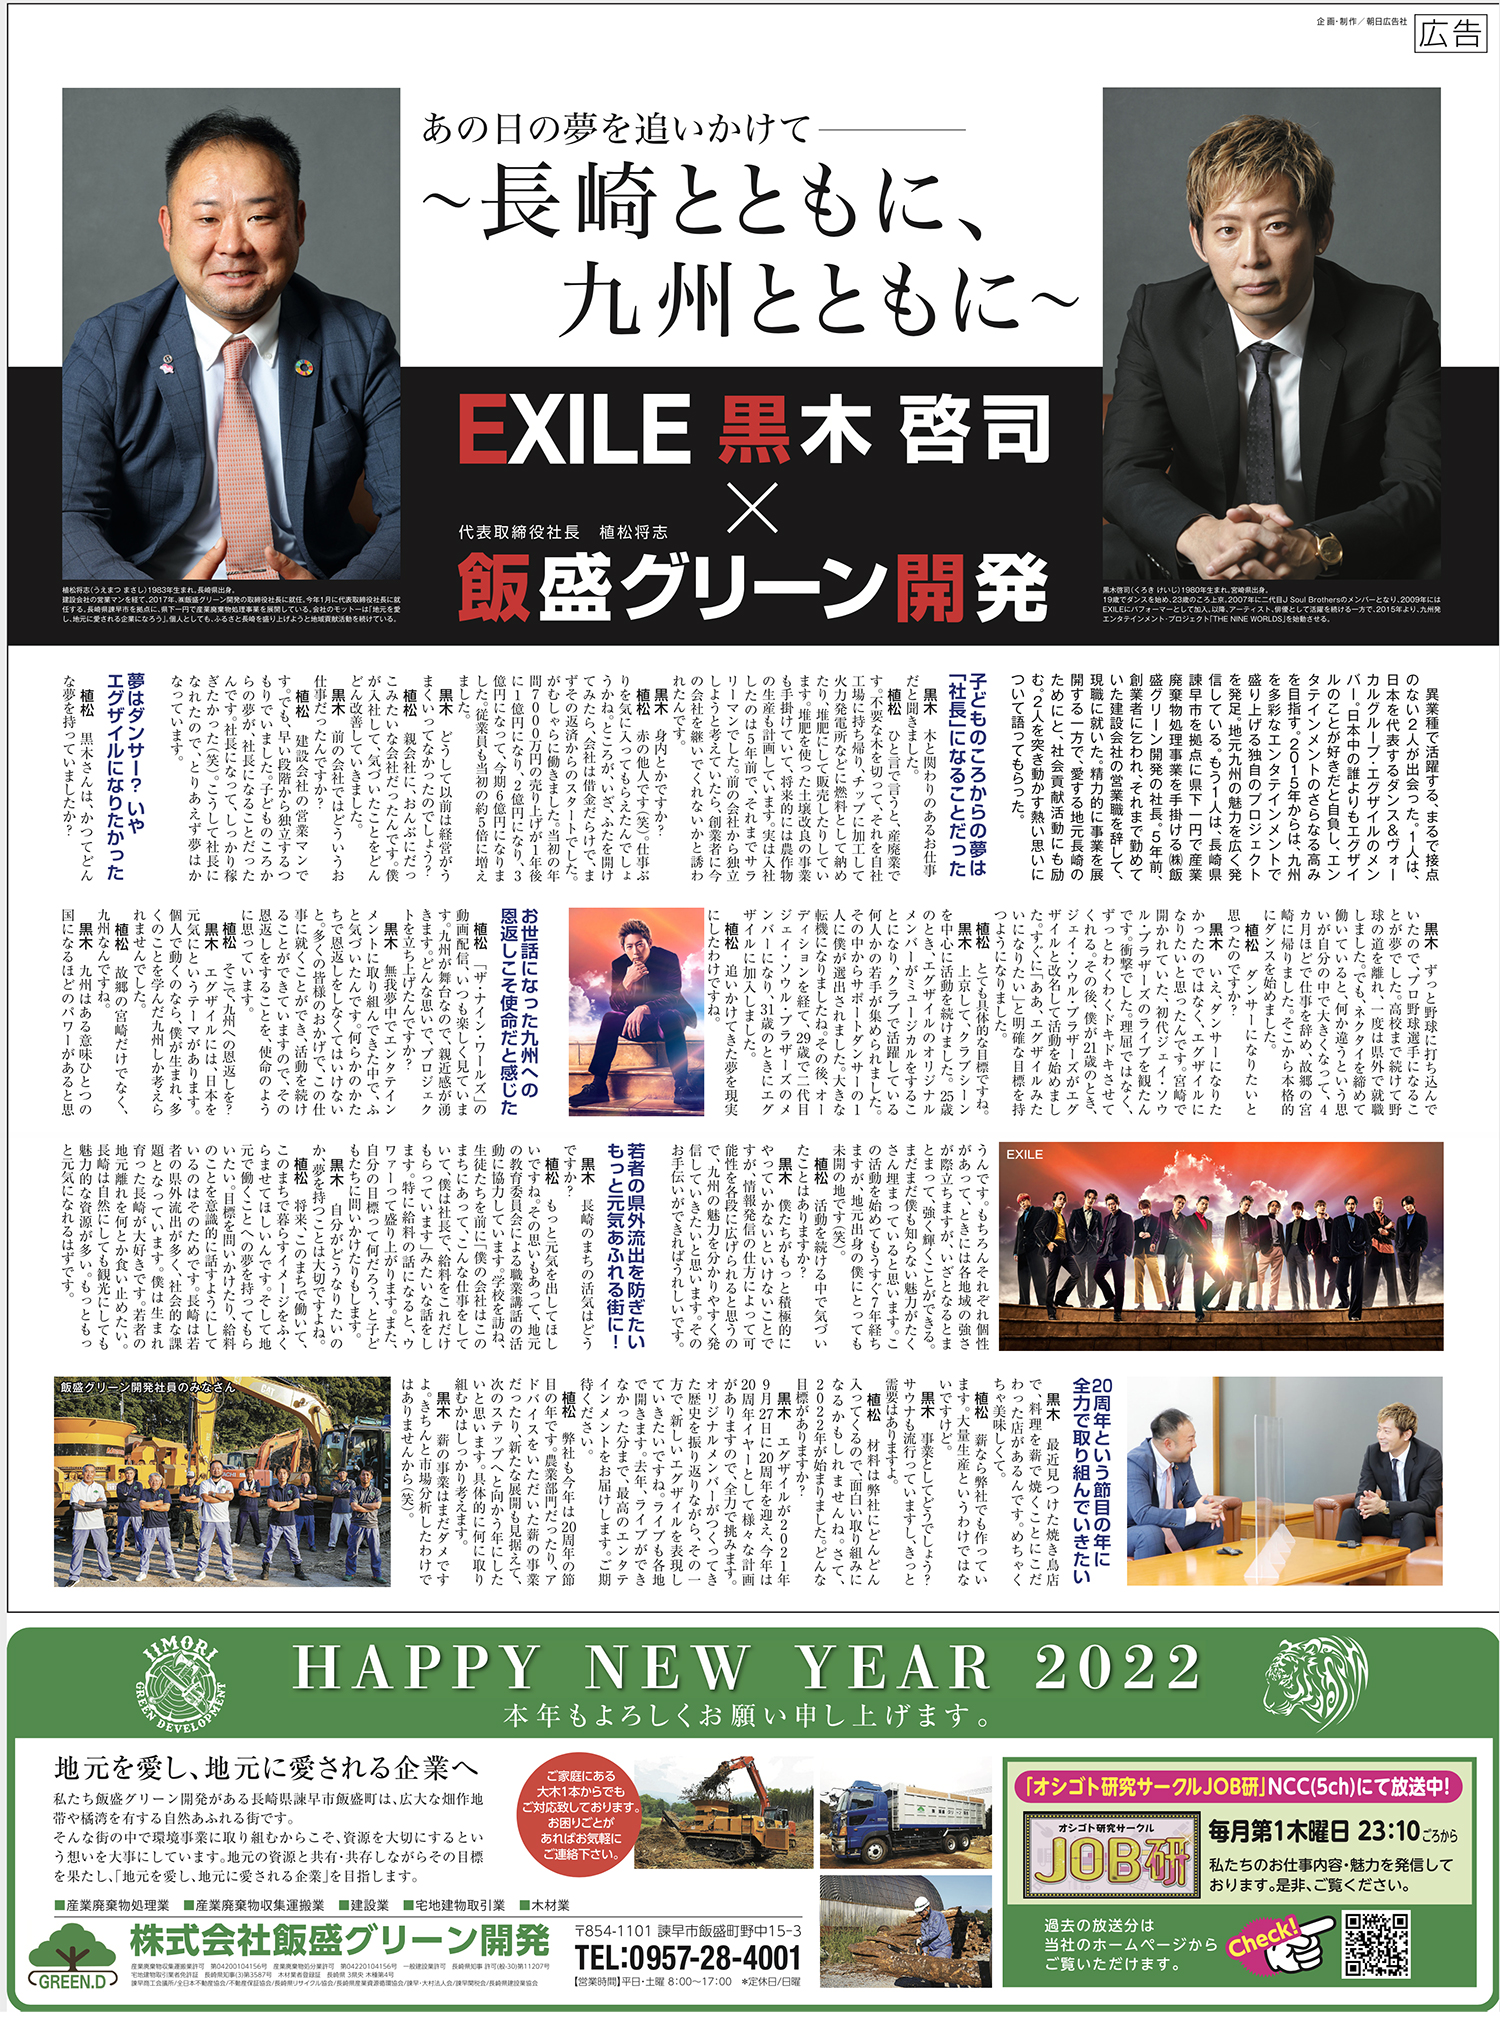 <span class="title">EXILE黒木さんと2022年正月対談実現！</span>